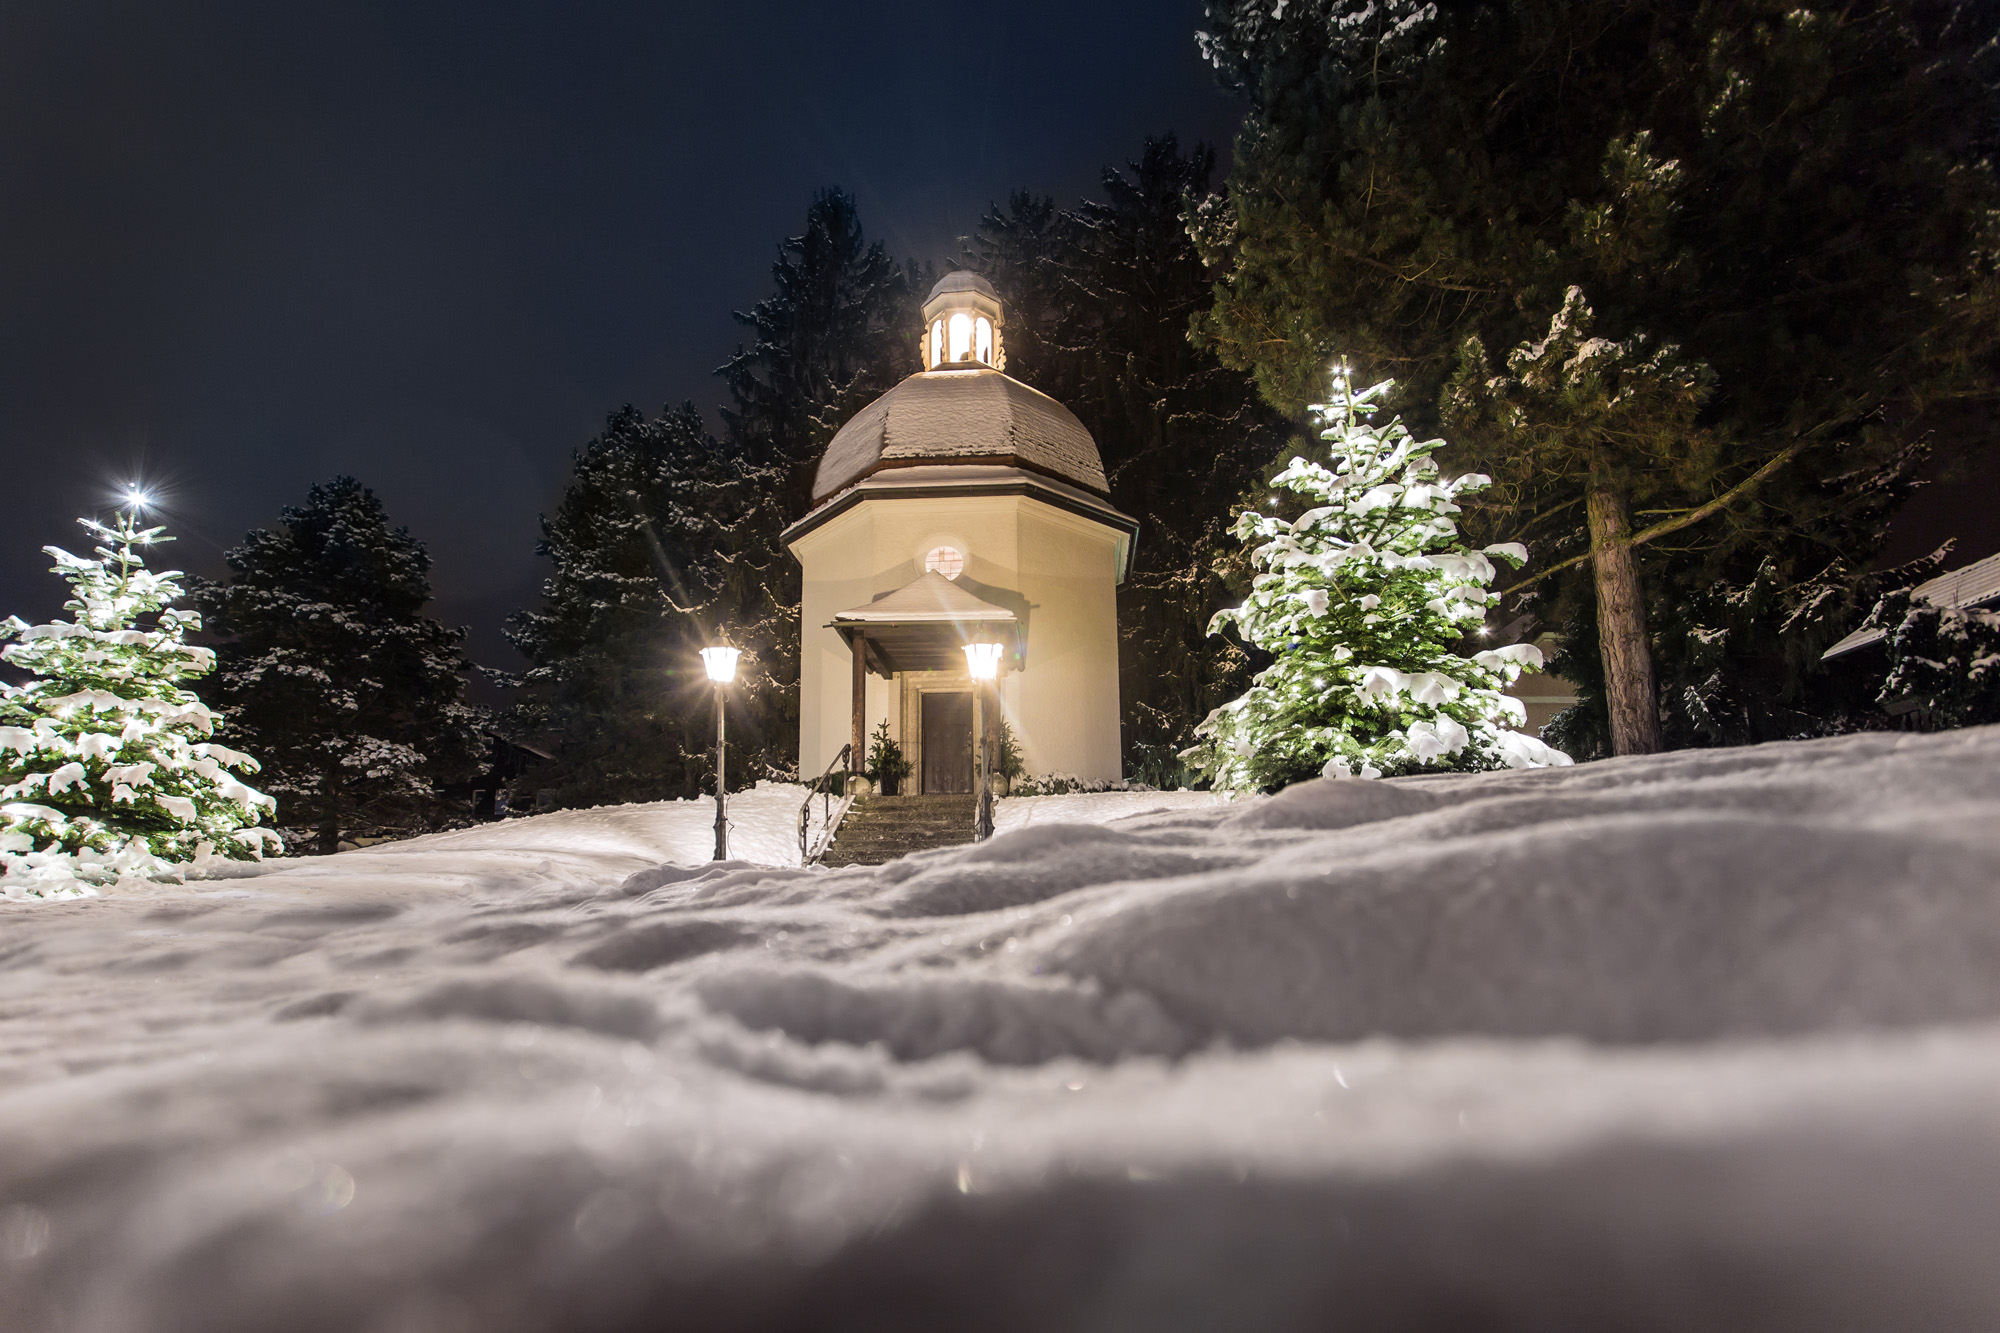 Christmas Eve marks 200th anniversary of beloved carol 'Silent Night'